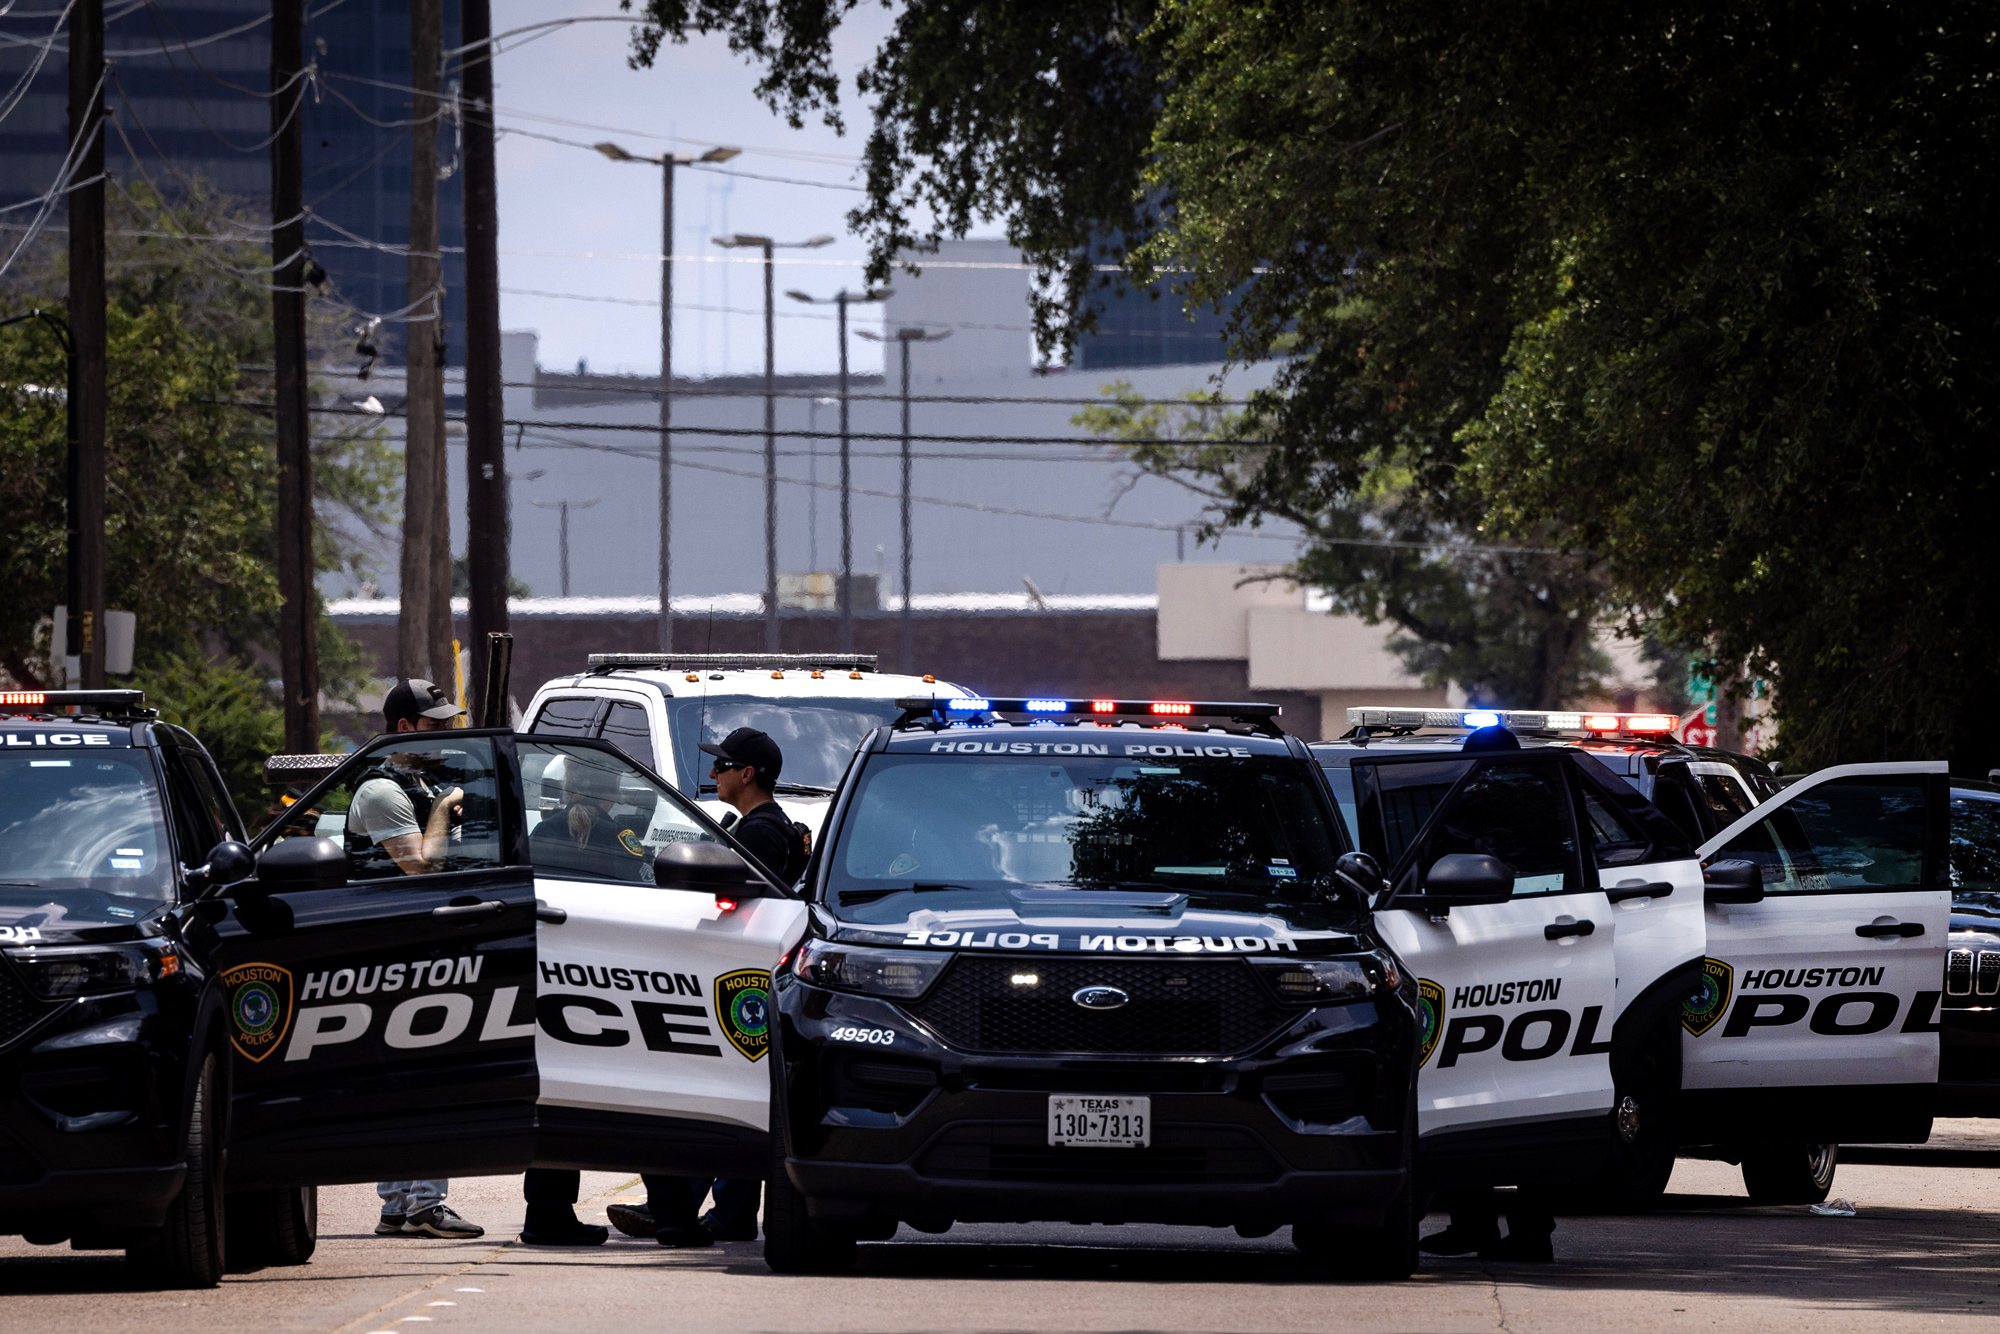 Police vehicles in Houston